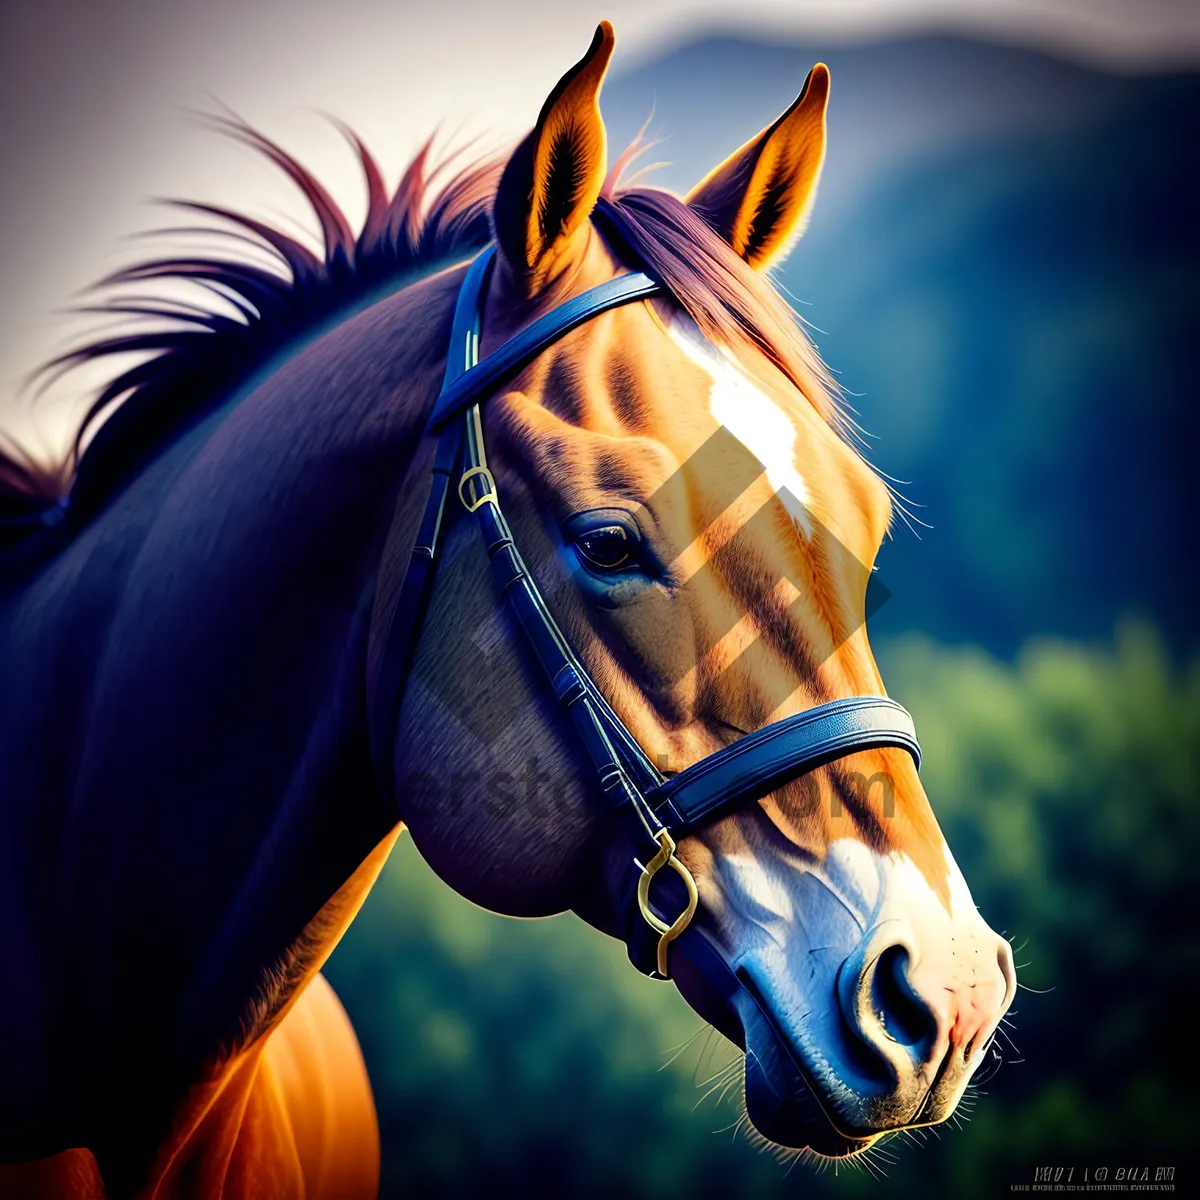 Picture of Majestic Chestnut Stallion in Equestrian Headgear